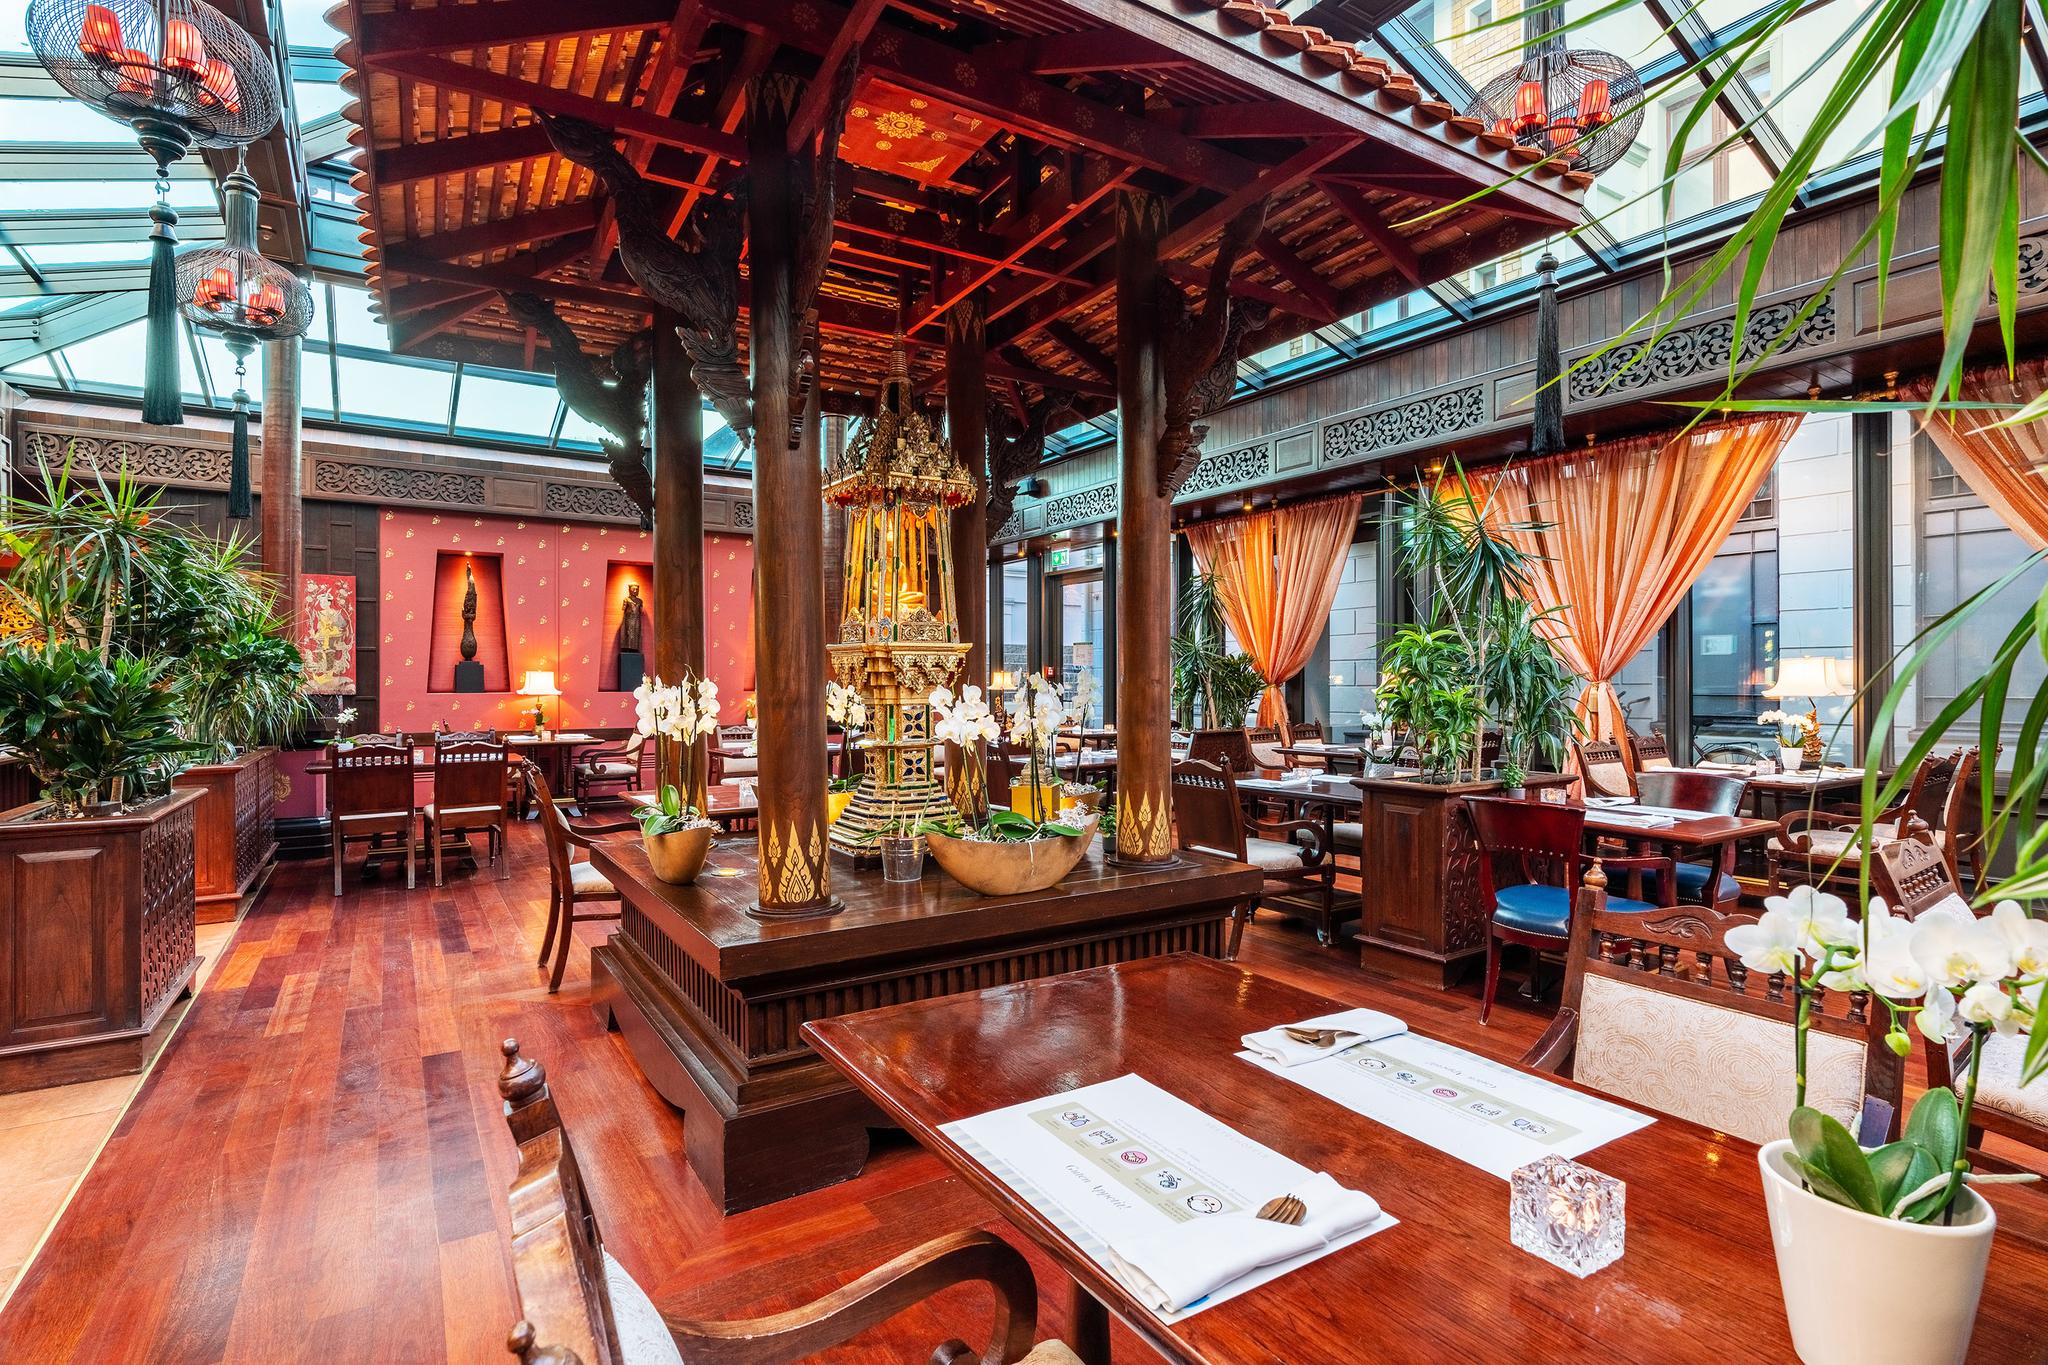 Restaurant "Suan thai" im Ahlbecker Hof